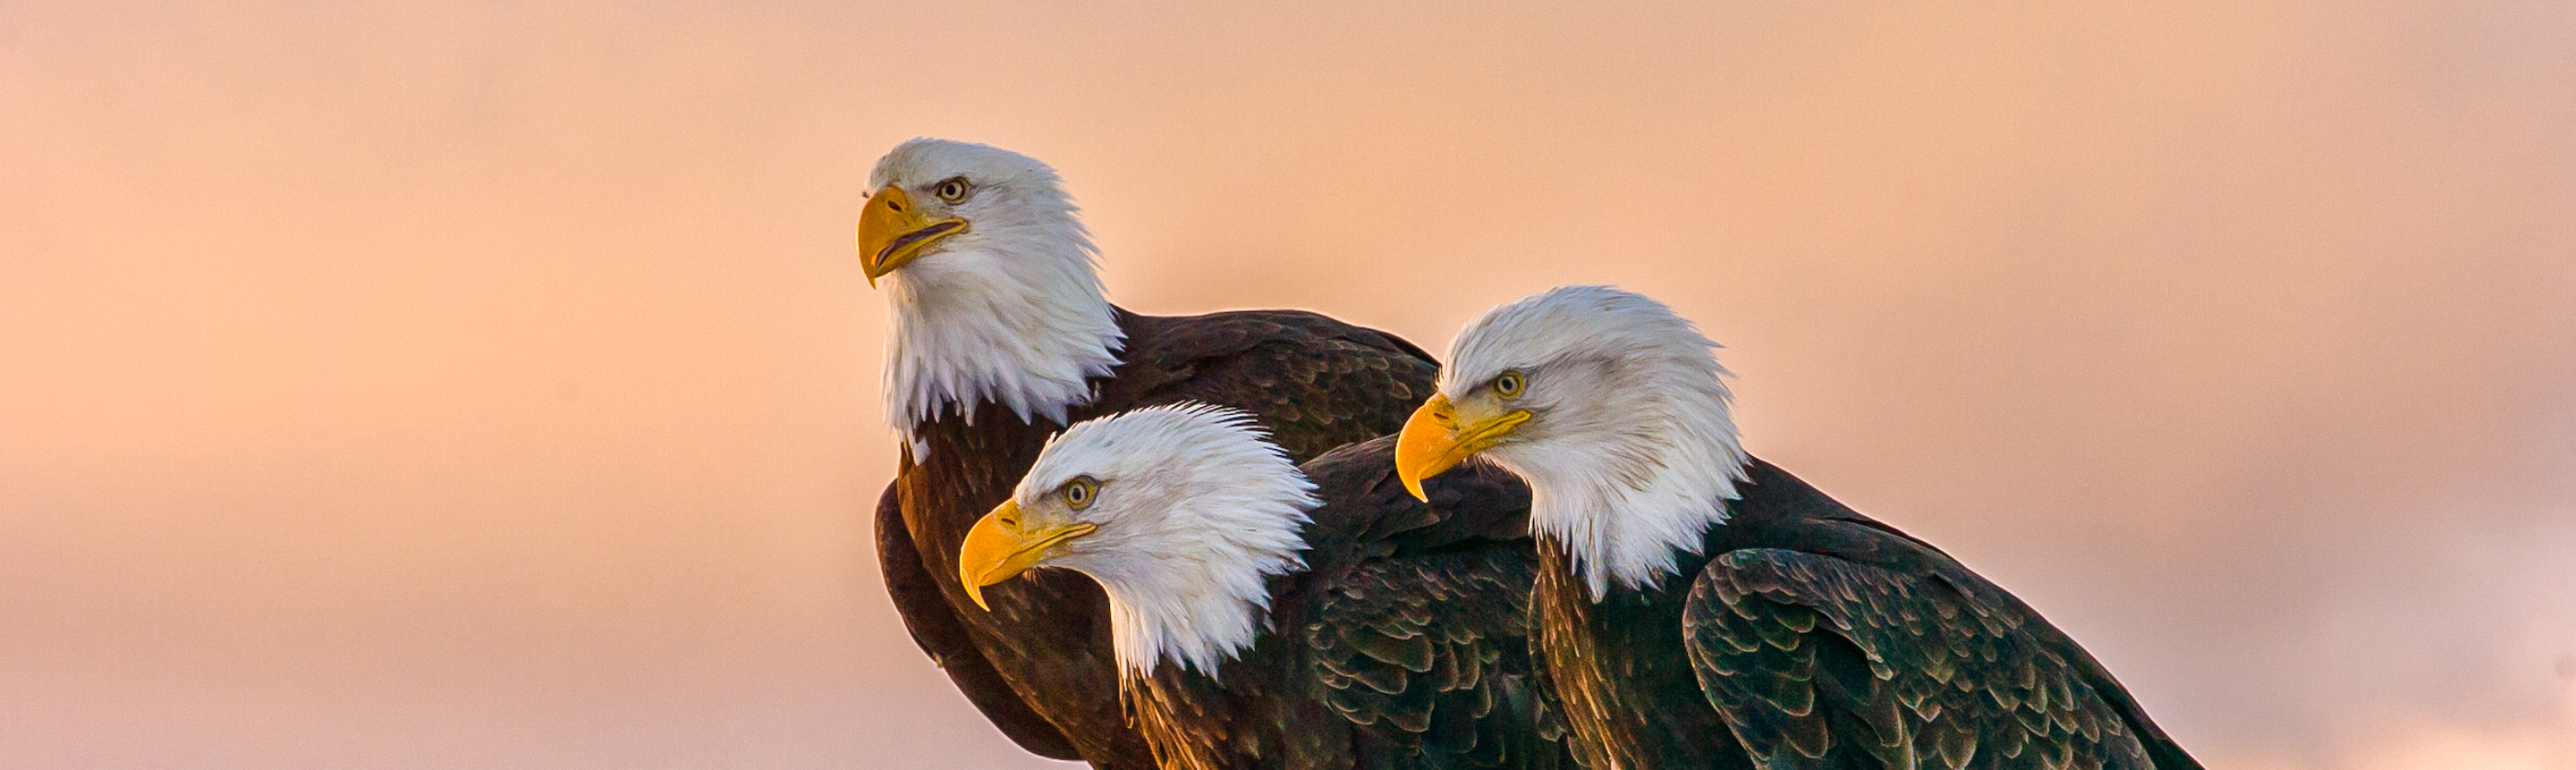 All About an All American Bird: The Bald Eagle - Bird Buddy Blog